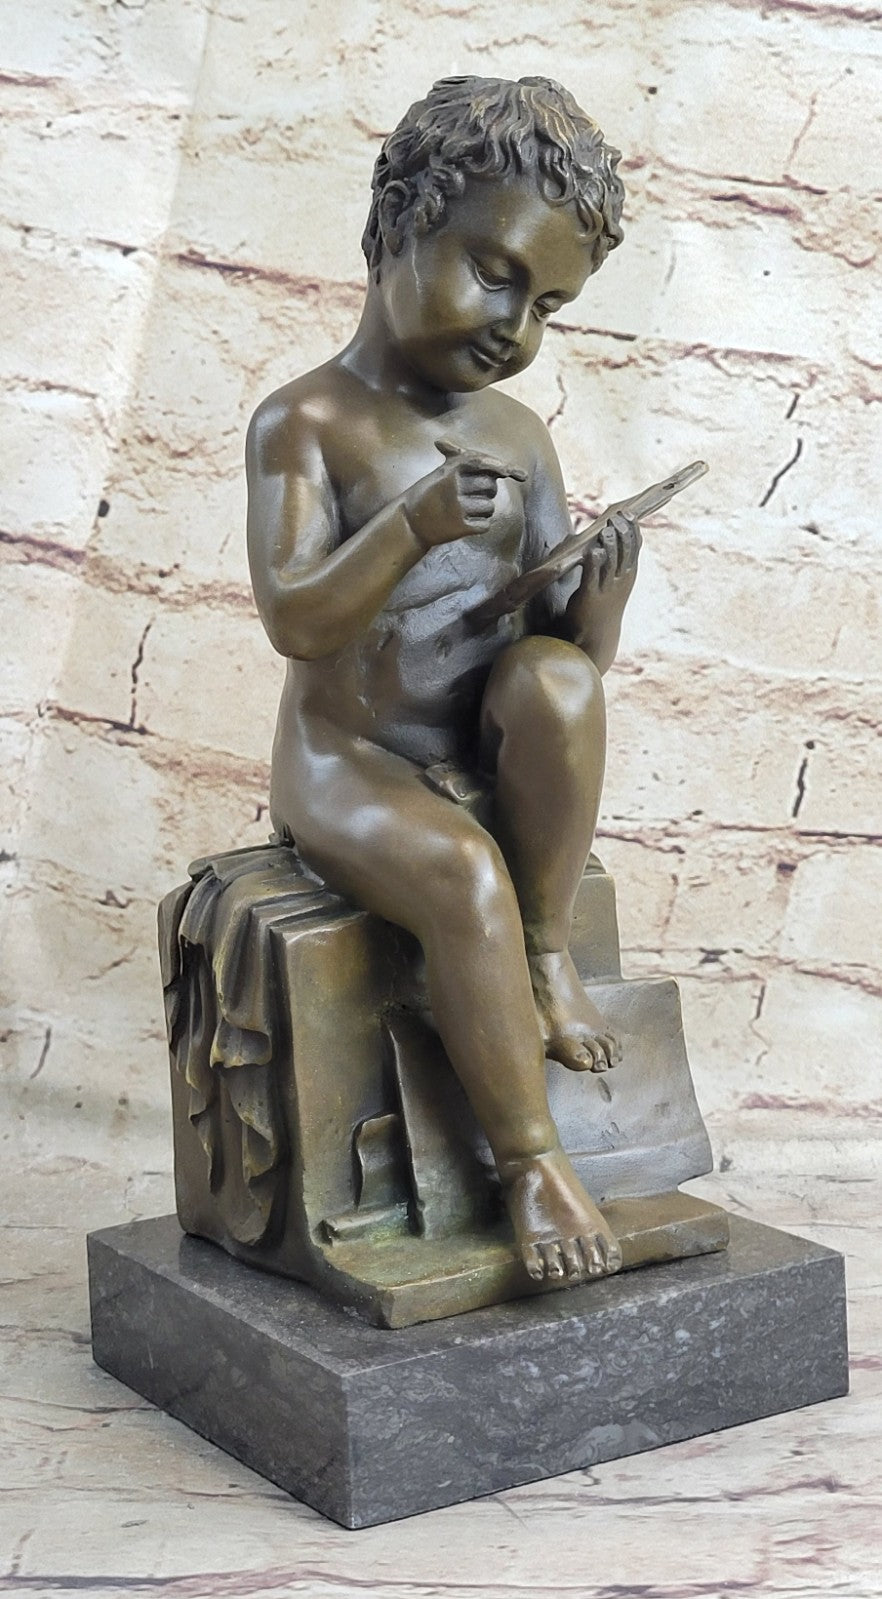 Handcrafted bronze sculpture SALE Acti Boy Nude Cute Taylor Art Original Signed